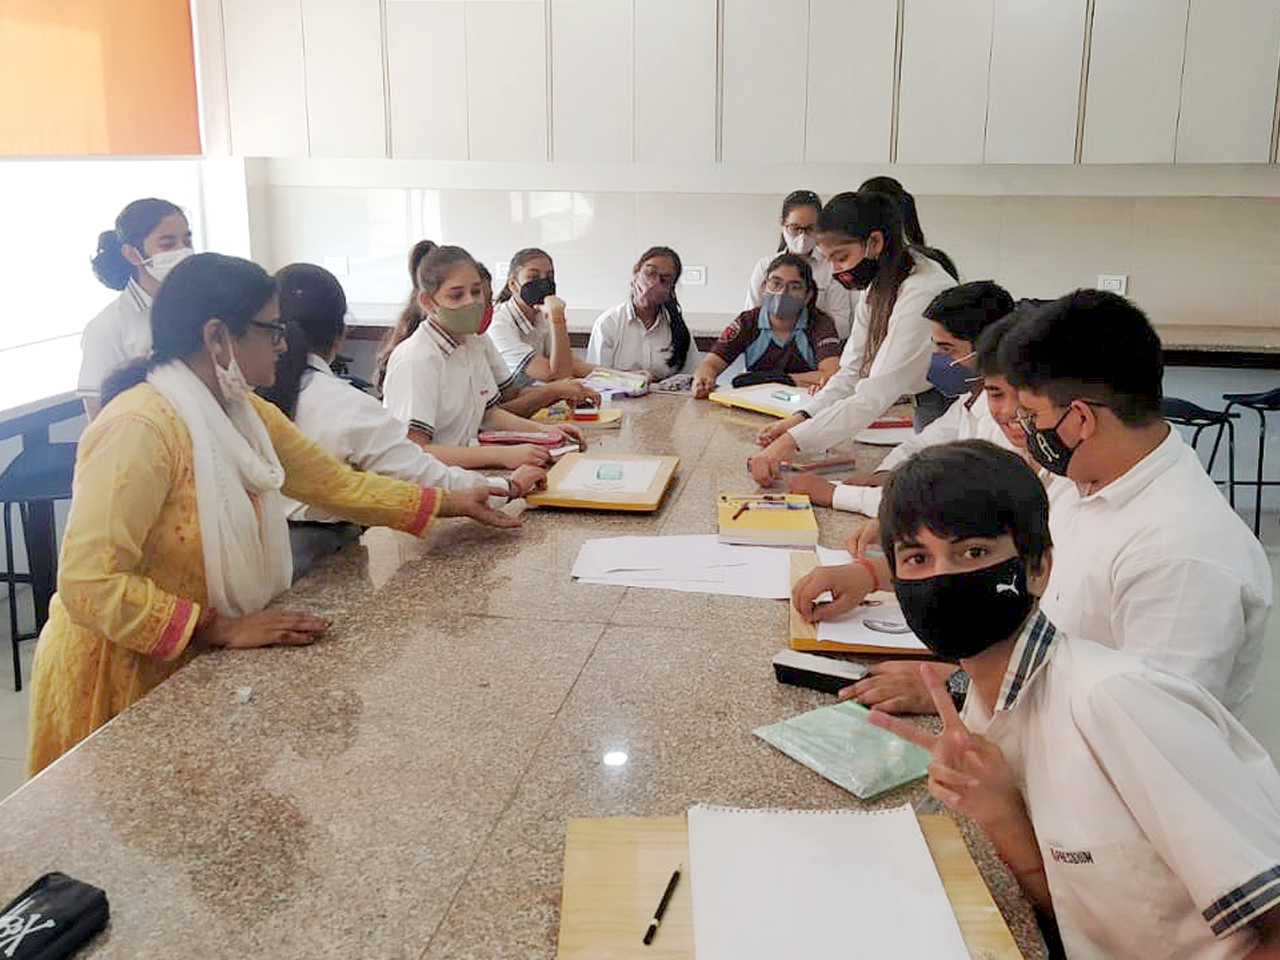 Presidium Rajnagar, STUDENTS PRACTICE THE ART OF INTROSPECTION!